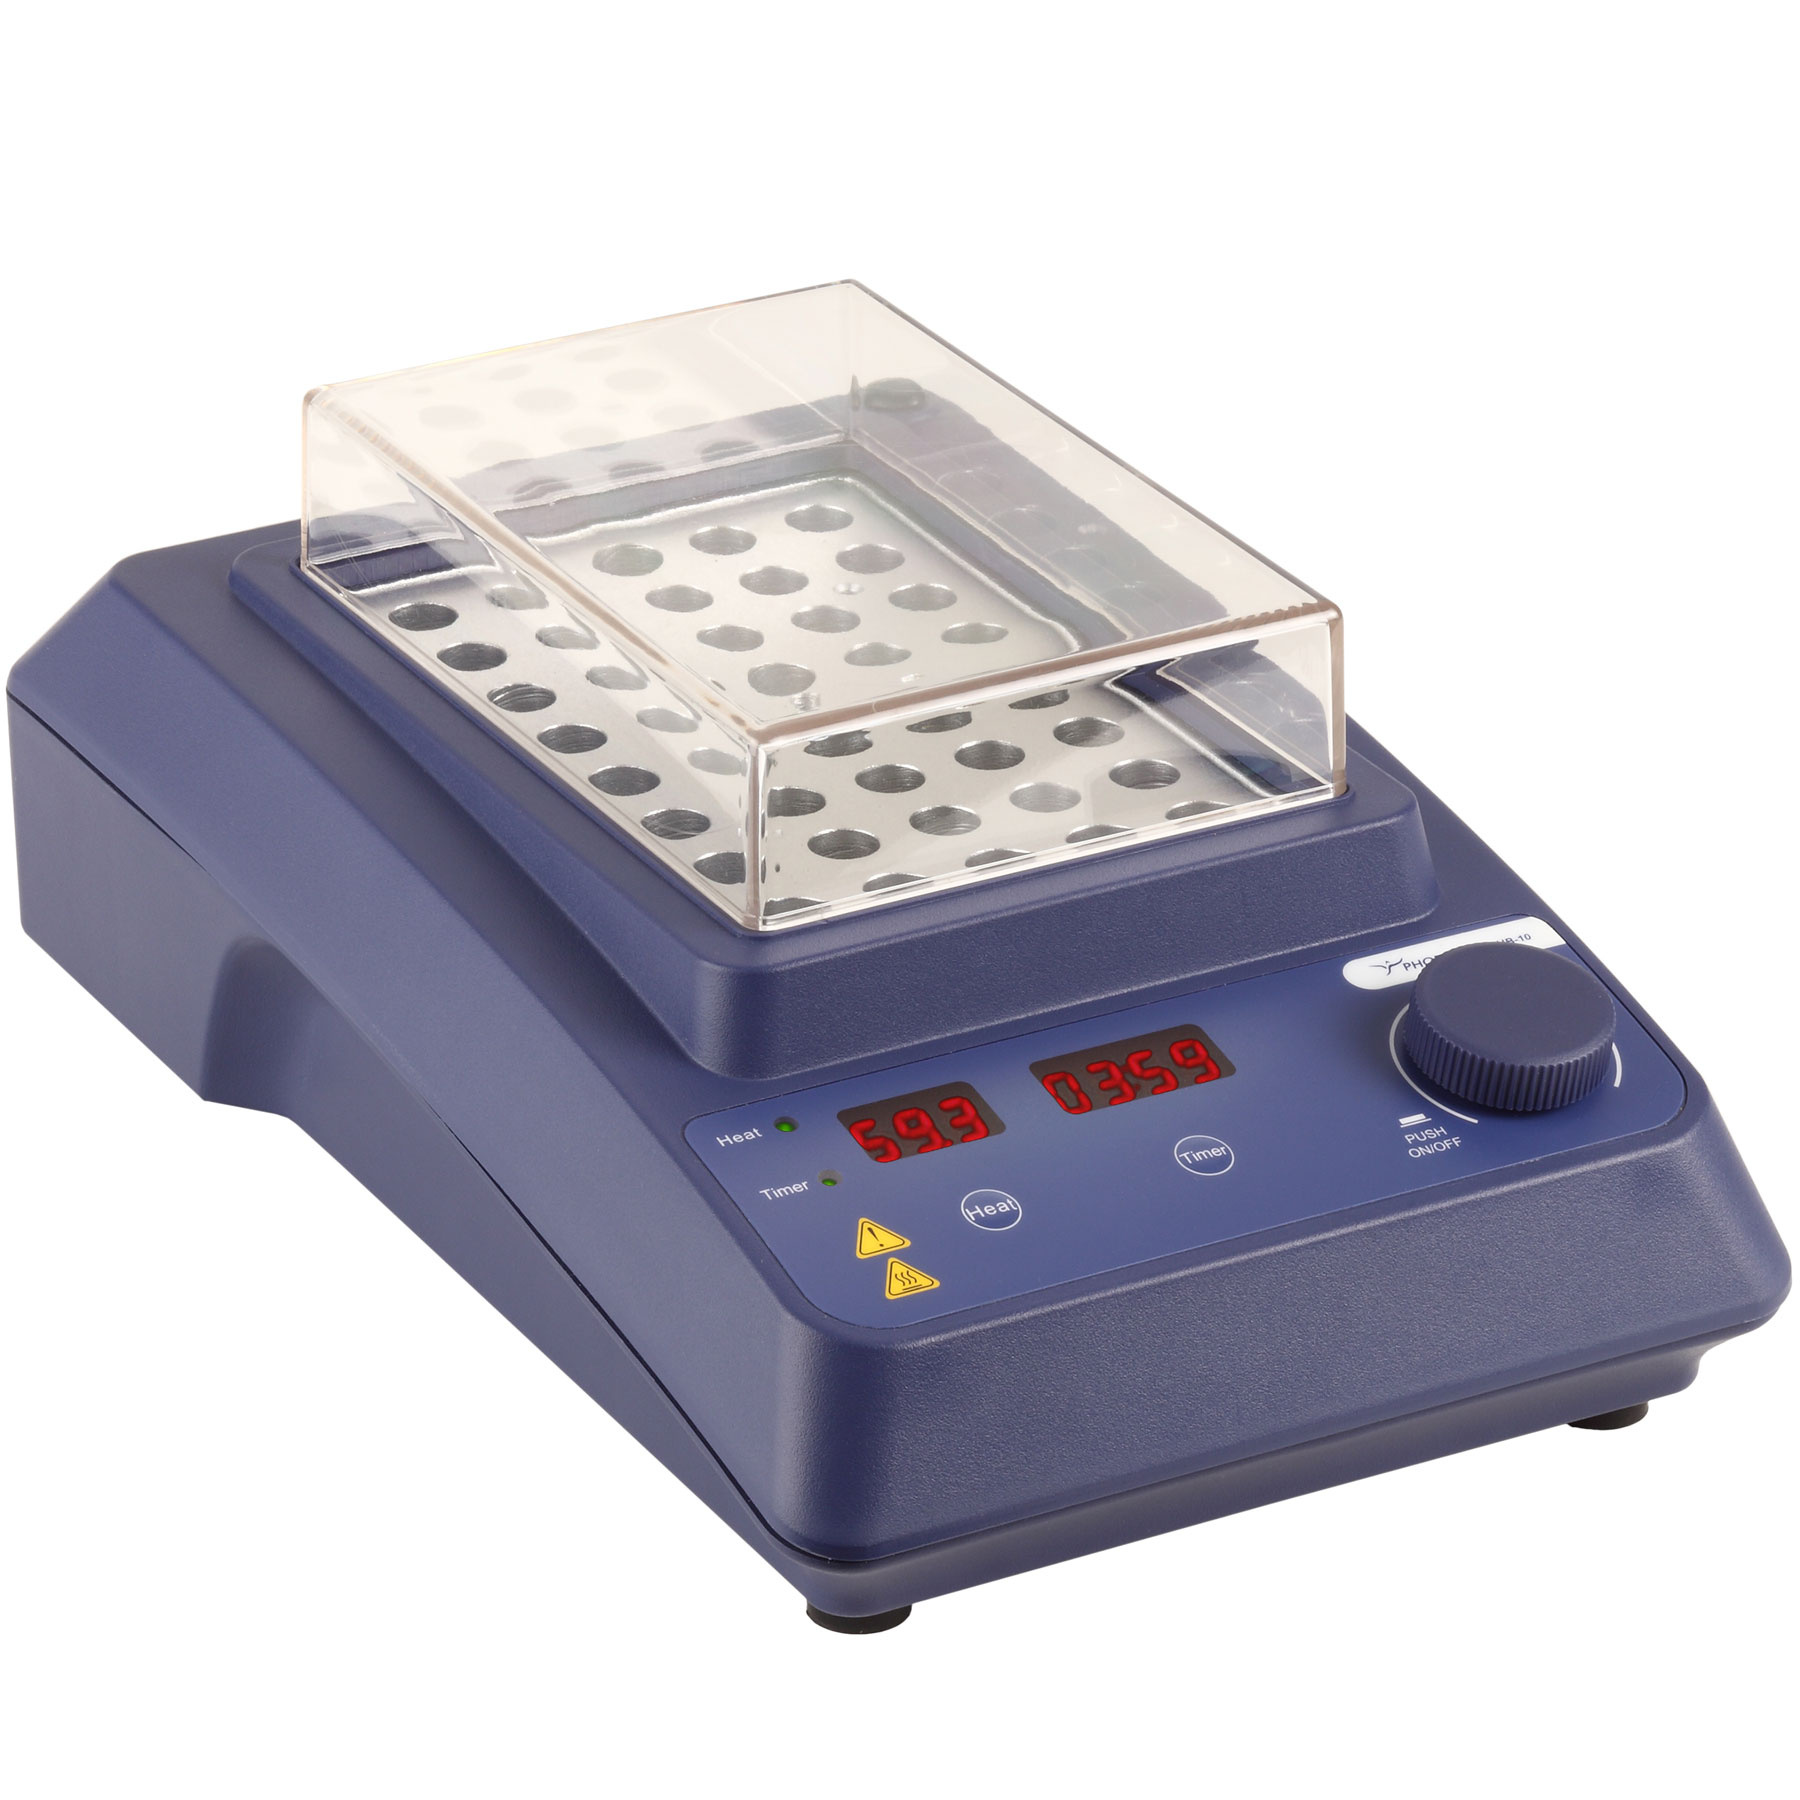 en-laboratory-thermostats-phoenix-instrument-digital-dry-bath-hb-100